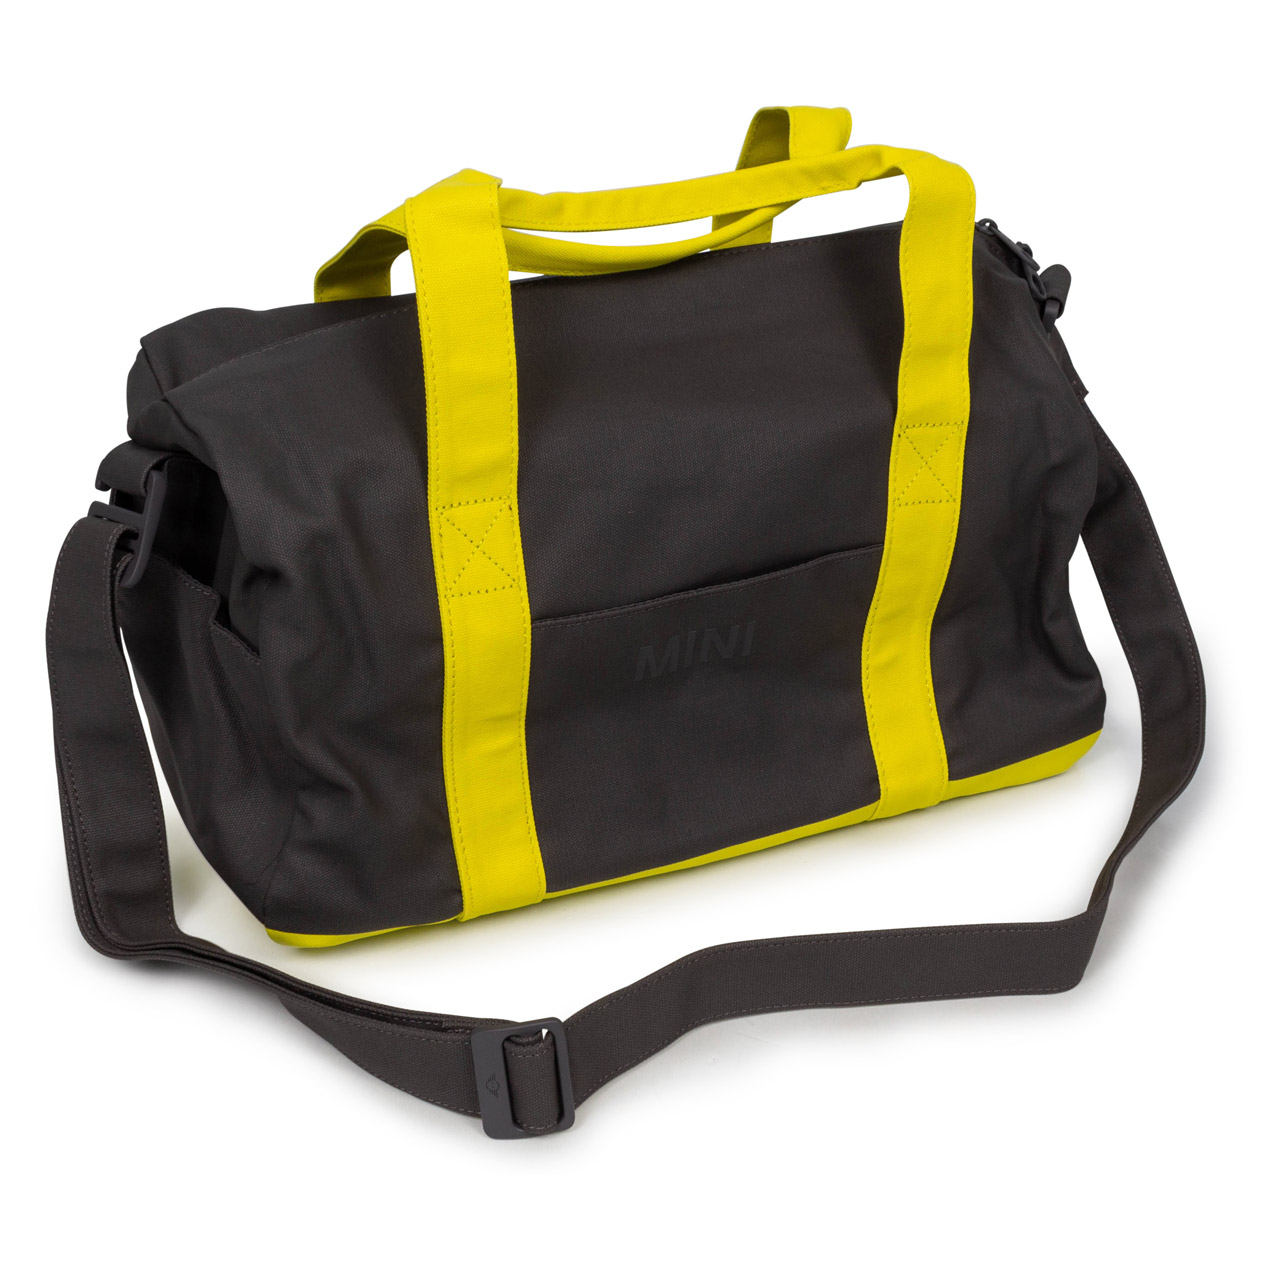 ORIGINAL Mini Tasche Duffle Bag Grau Zitronengelb 45 x 25 x 27cm 80222445673